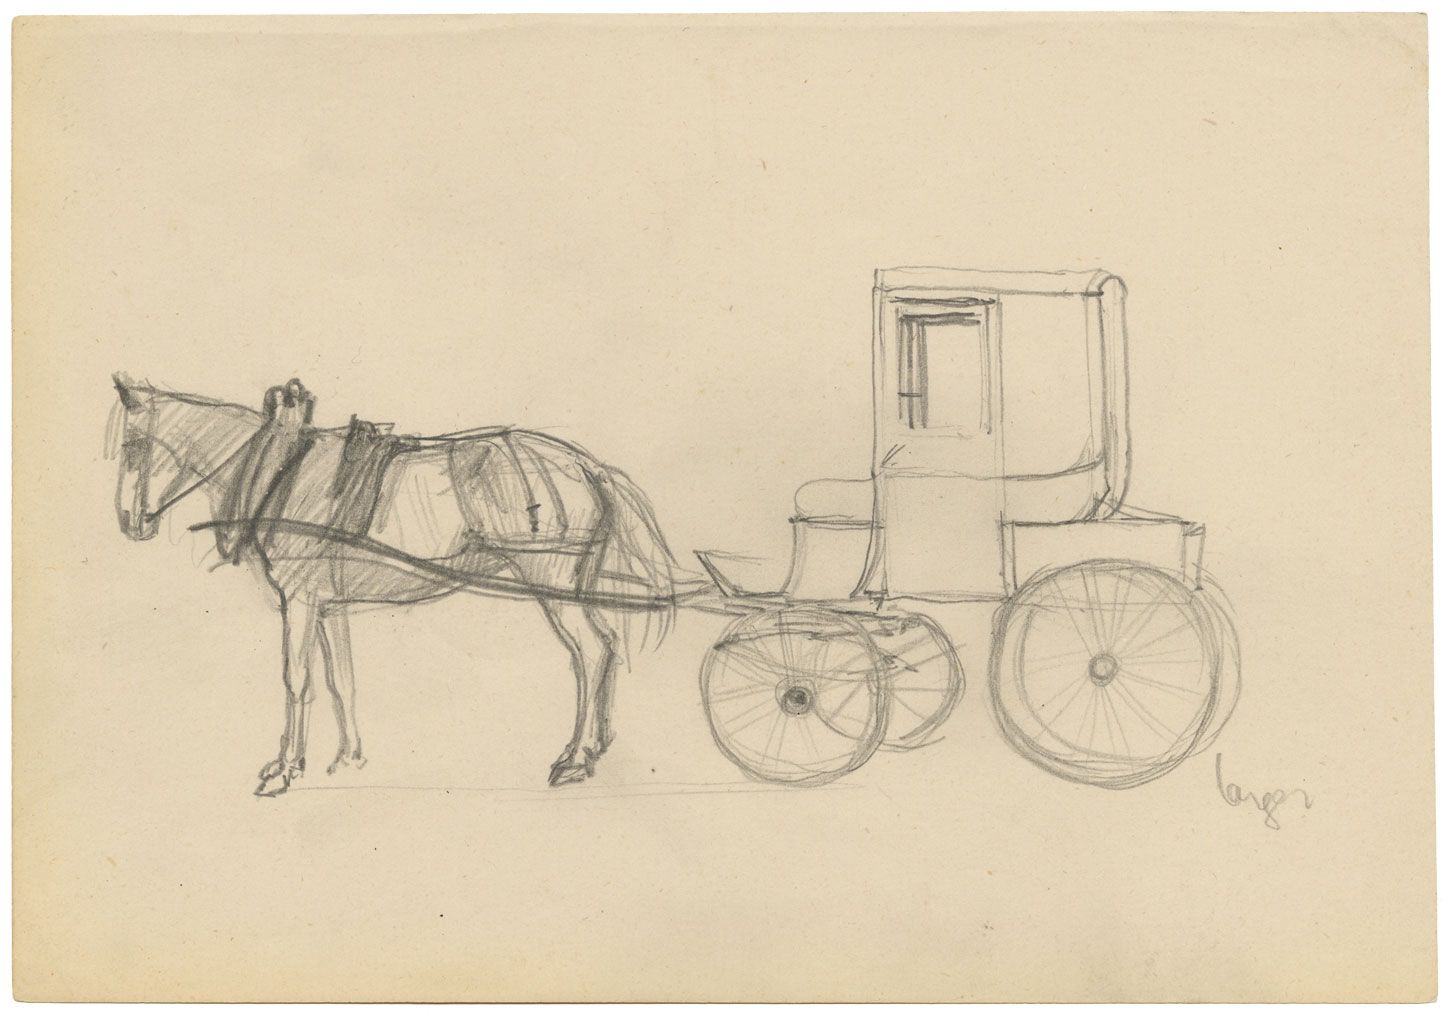 Paul Sandby (1731-1809) - A two-wheeled carriage